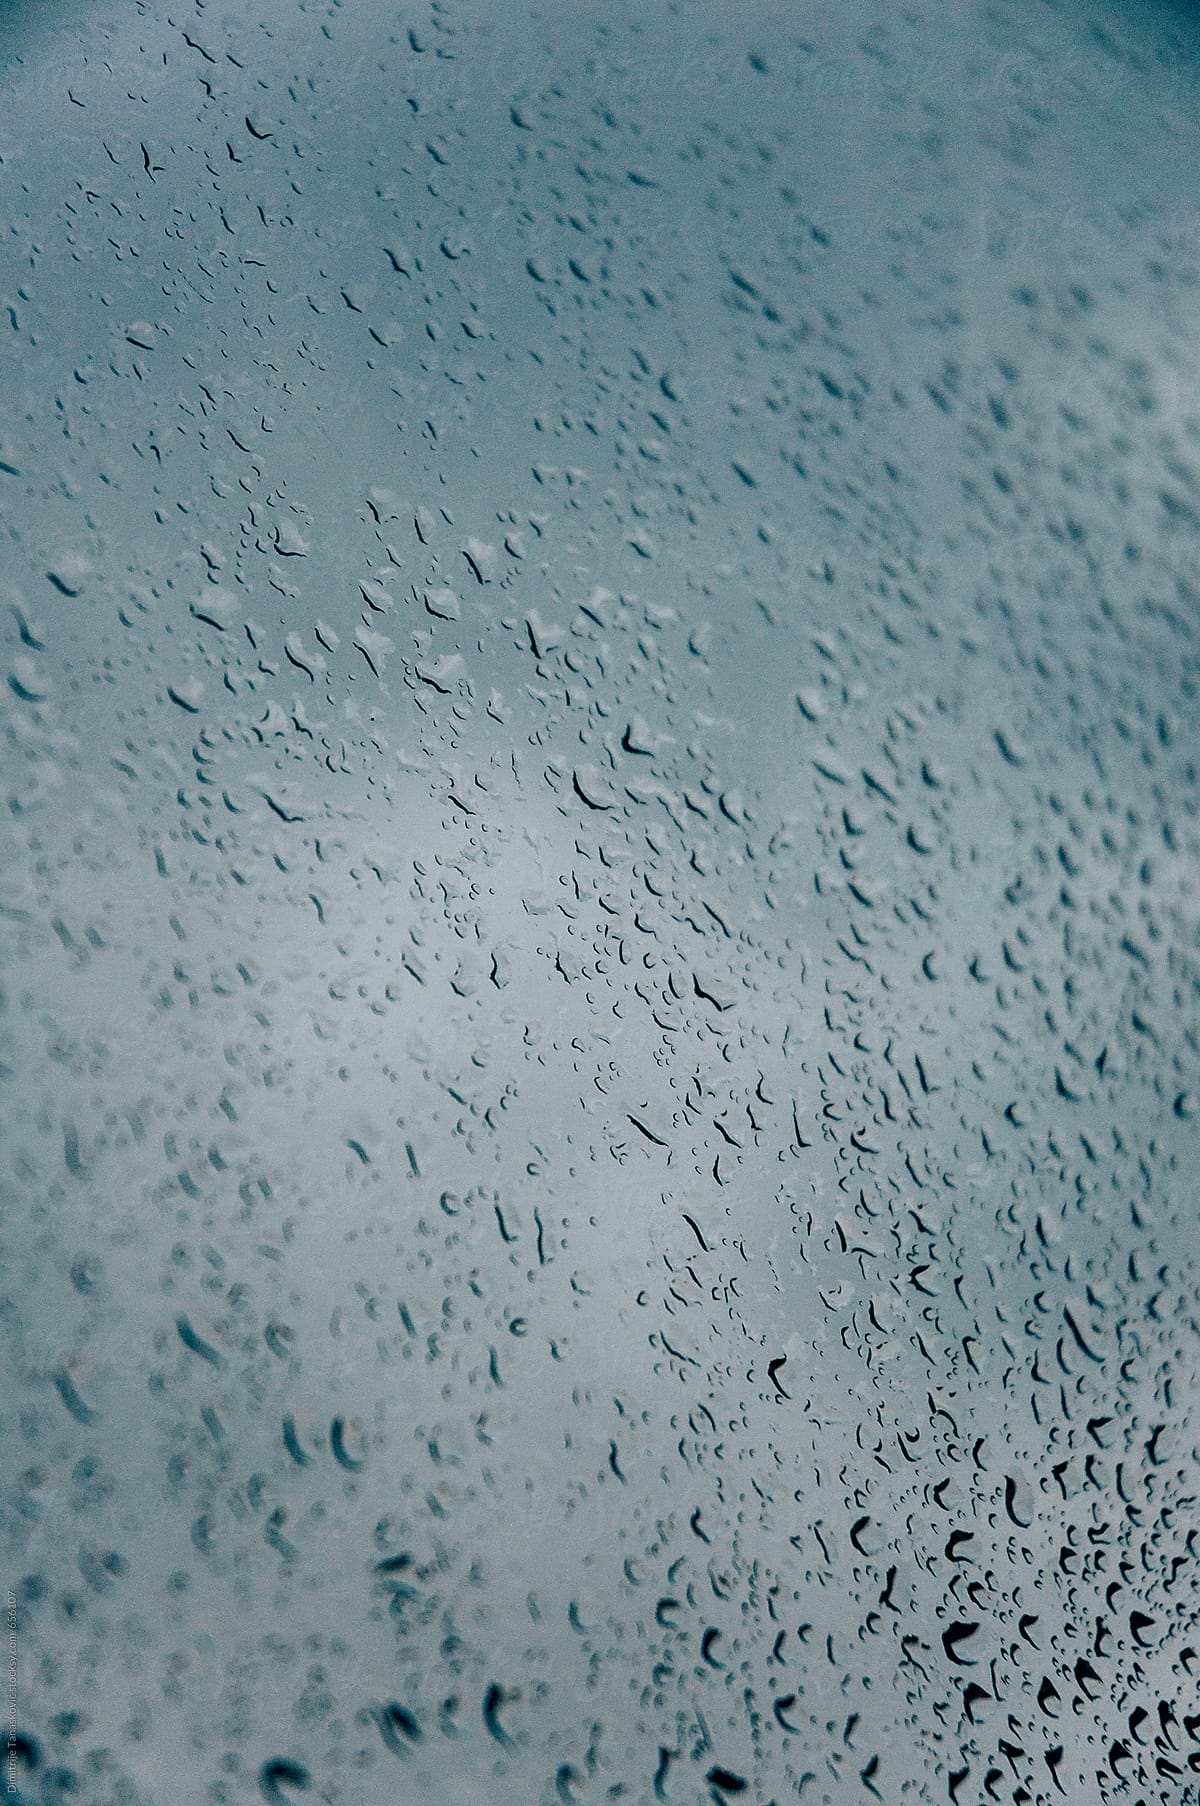 Rainy day. Raindrops on the window